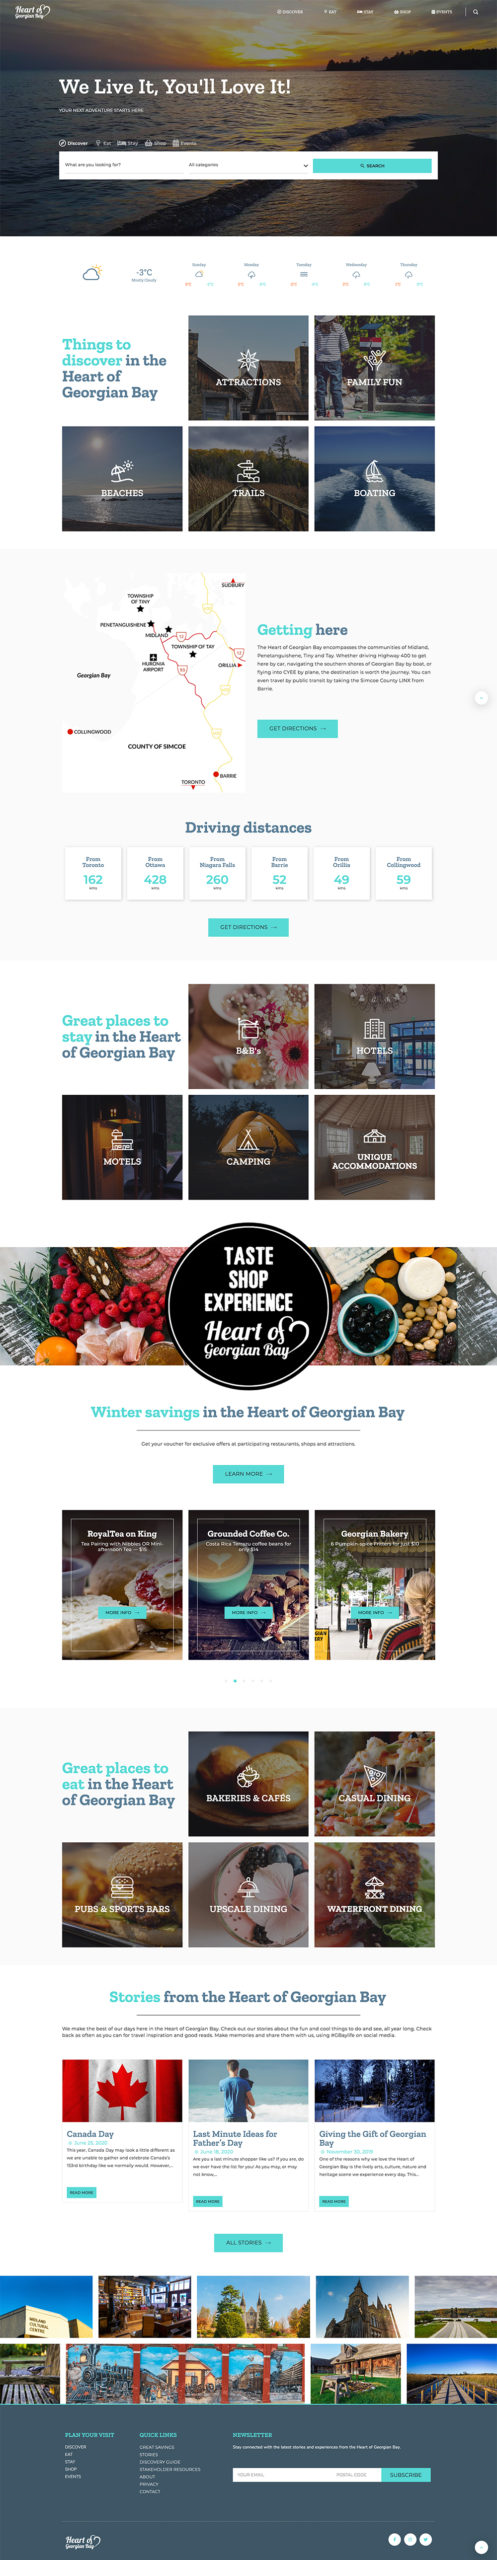 Heart of Georgian Bay Homepage